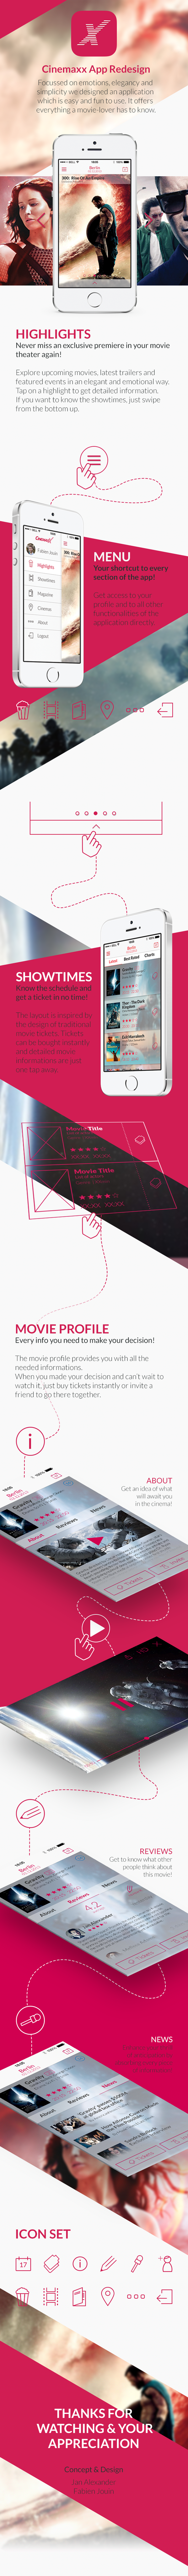 Cinemaxx ios7 app mobile design UI ux Movies movie theatre movie Cinema showtimes icons Icon flat design